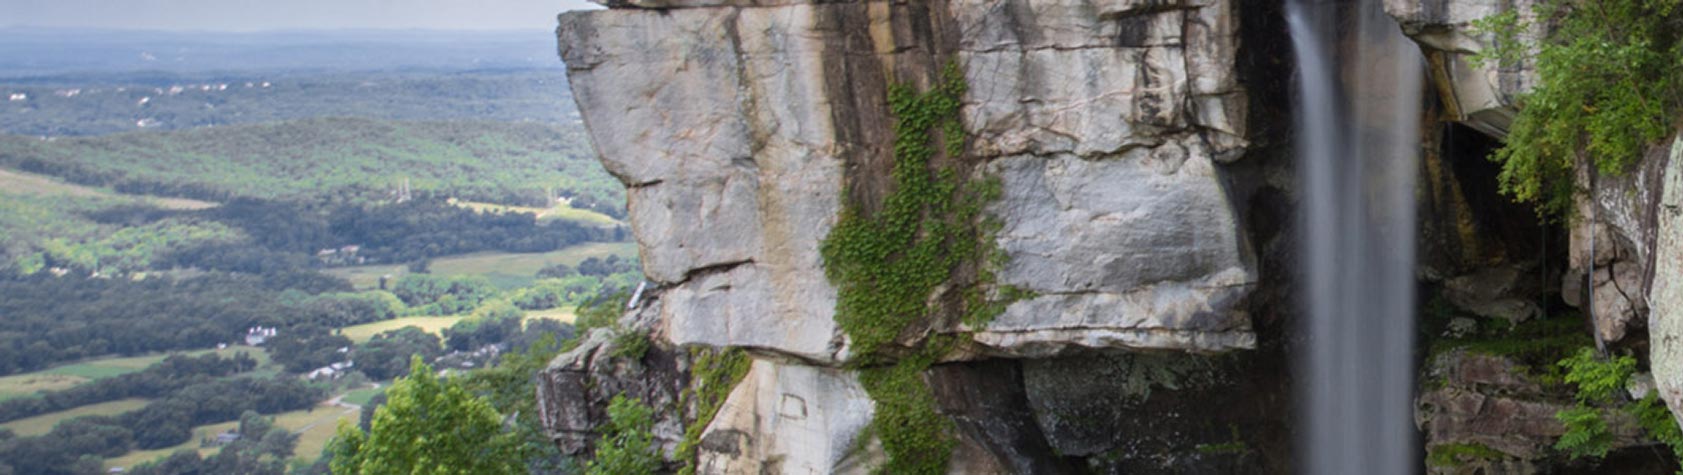 Pictured: A mountain waterfall in Georgia.